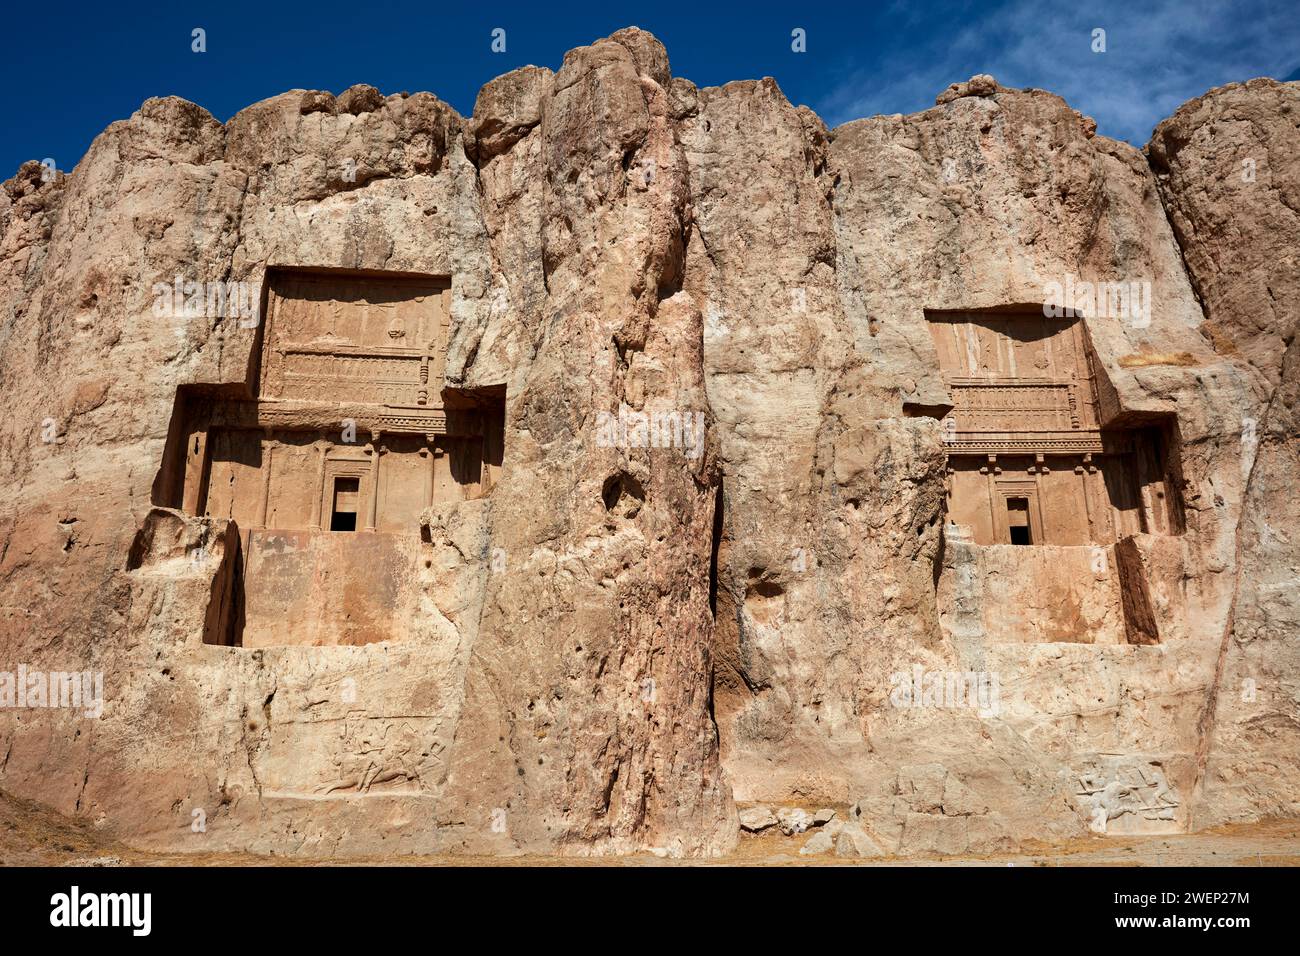 Tumbas de dos reyes aquemenios del Imperio Persa: Artajerjes I (derecha) y Darío II (izquierda). Necrópolis Naqsh-e Rostam cerca de Persépolis, Irán Foto de stock